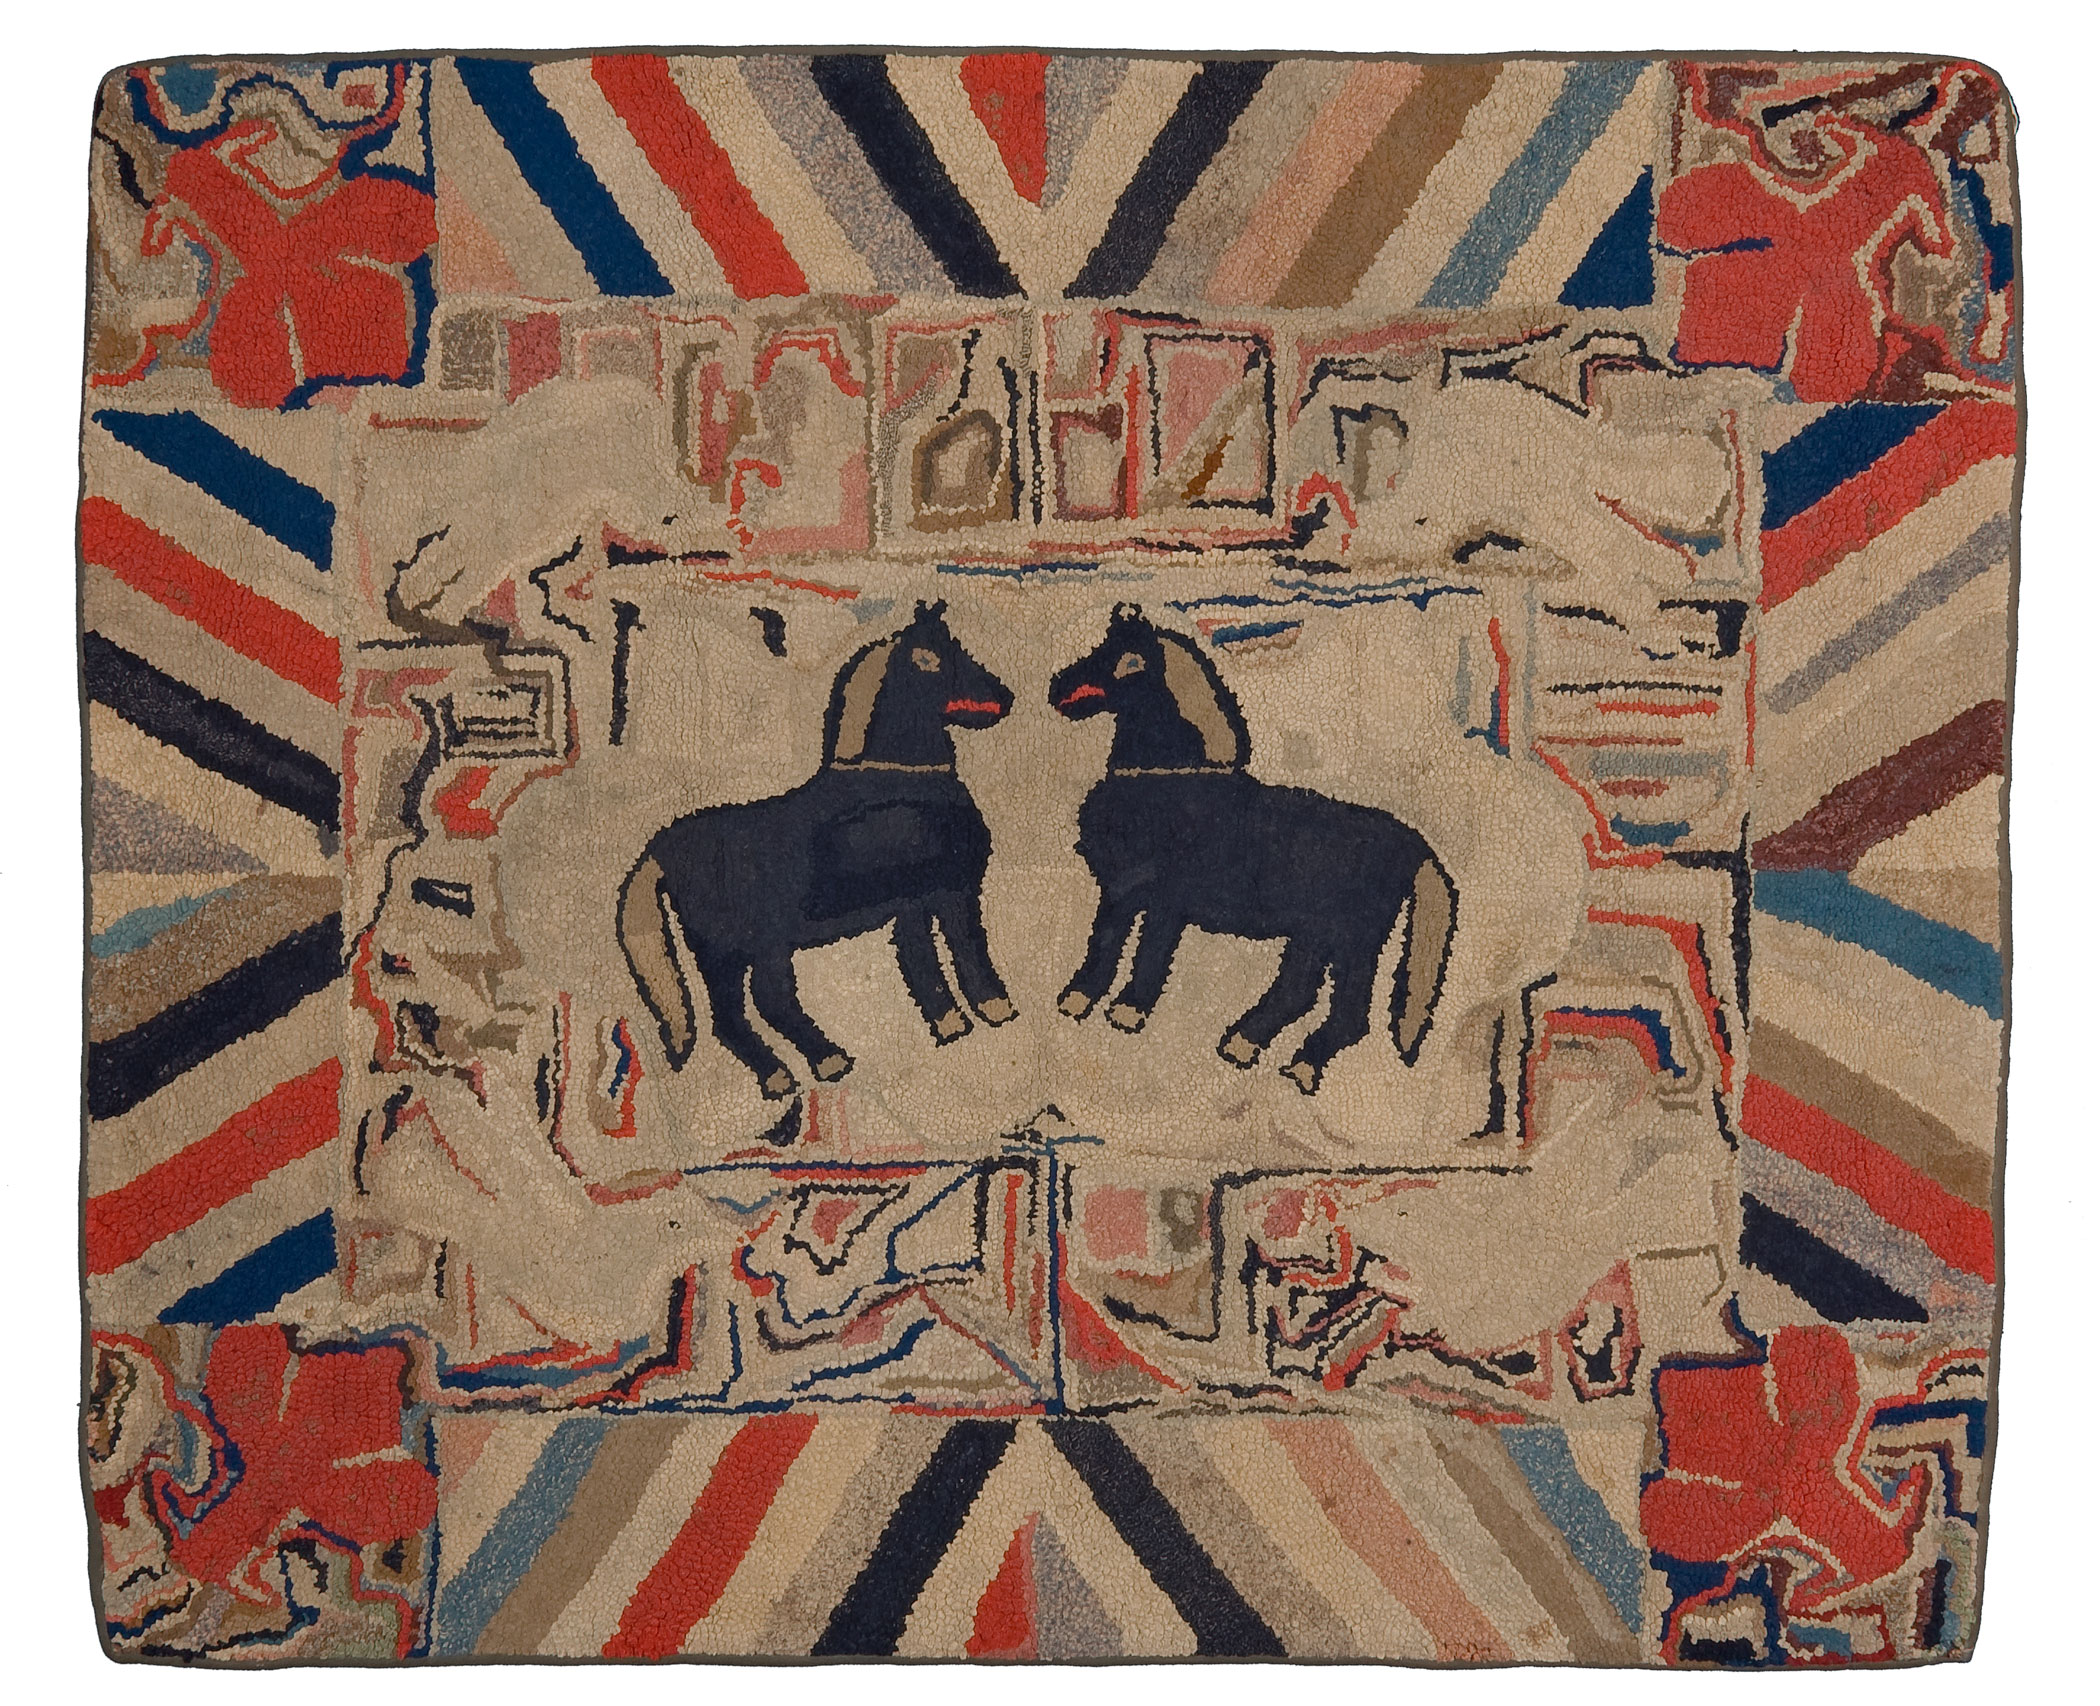 Hooked rug, Pennsylvania, c. 1800–1900